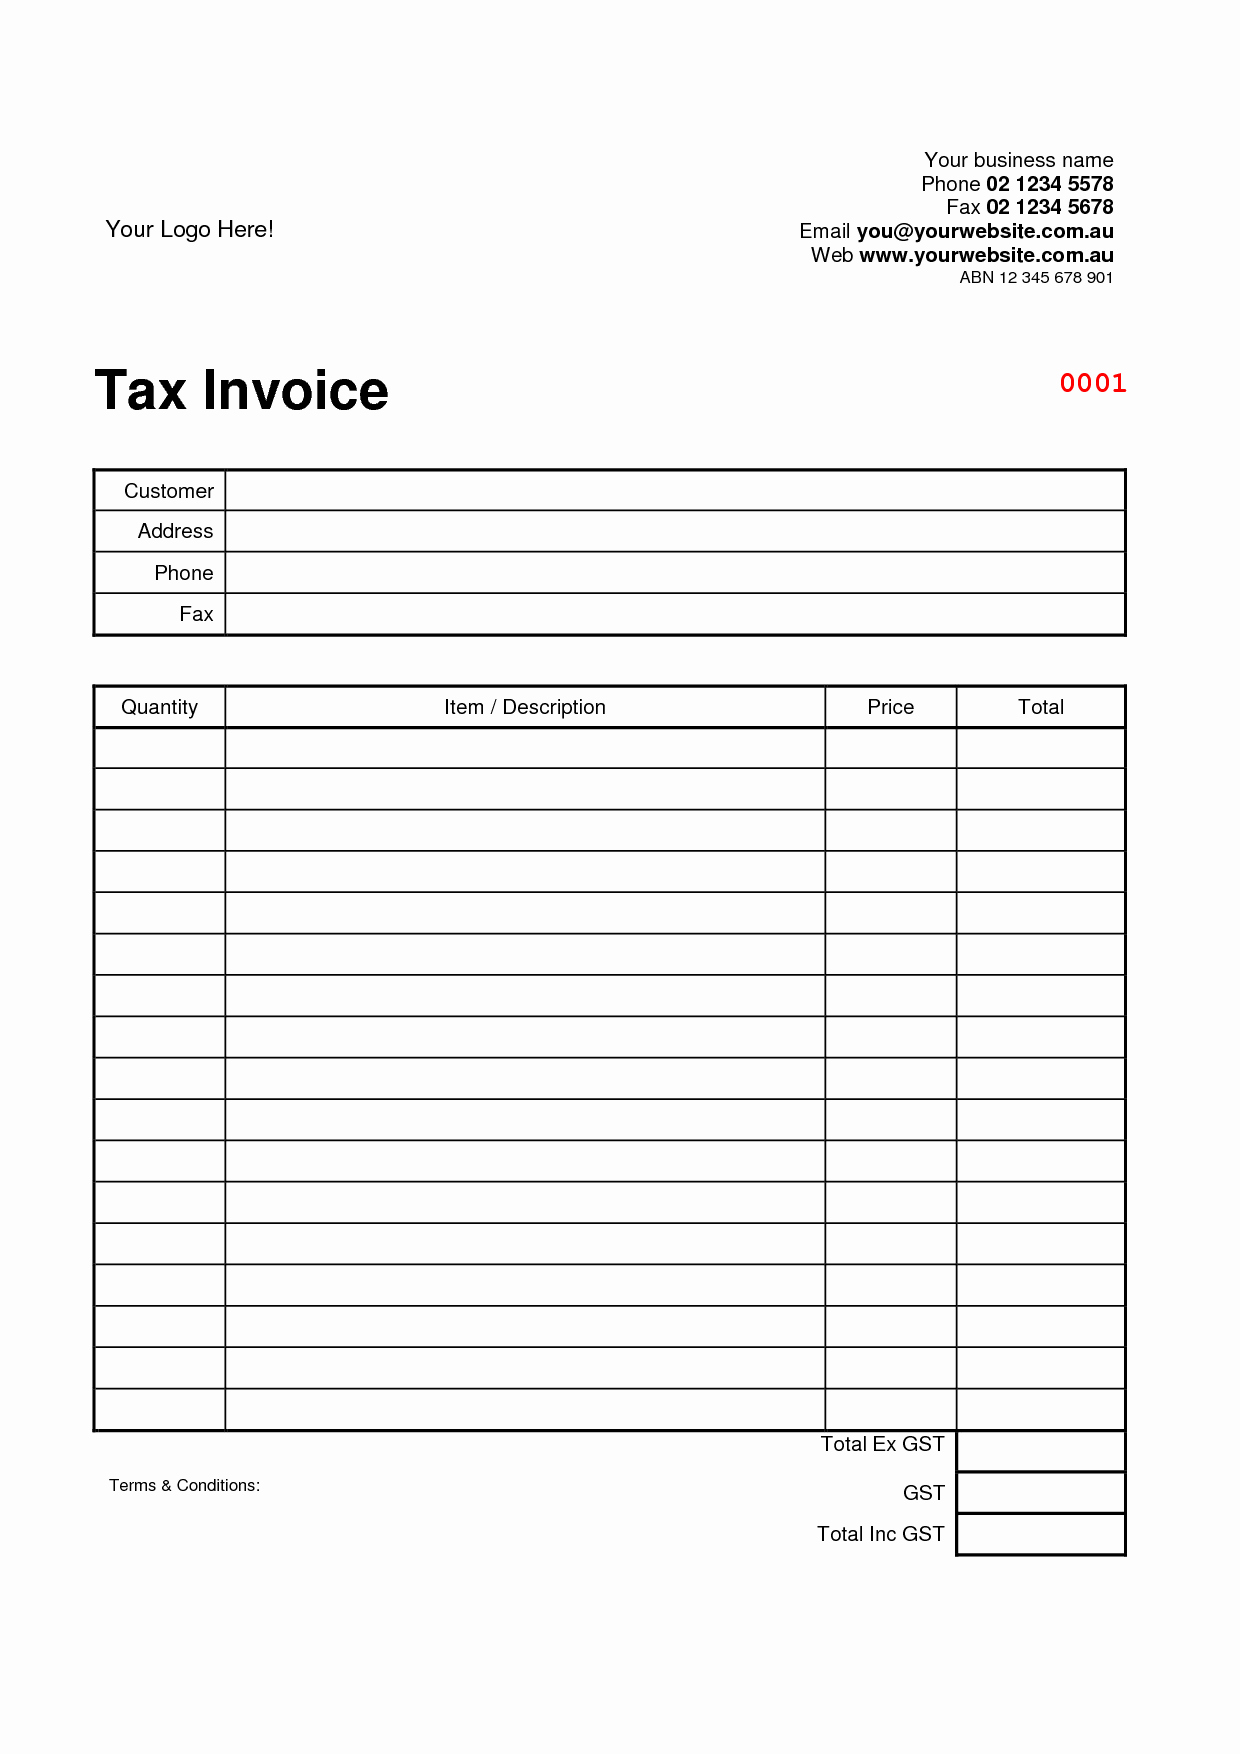 Tax Invoice Template Australia